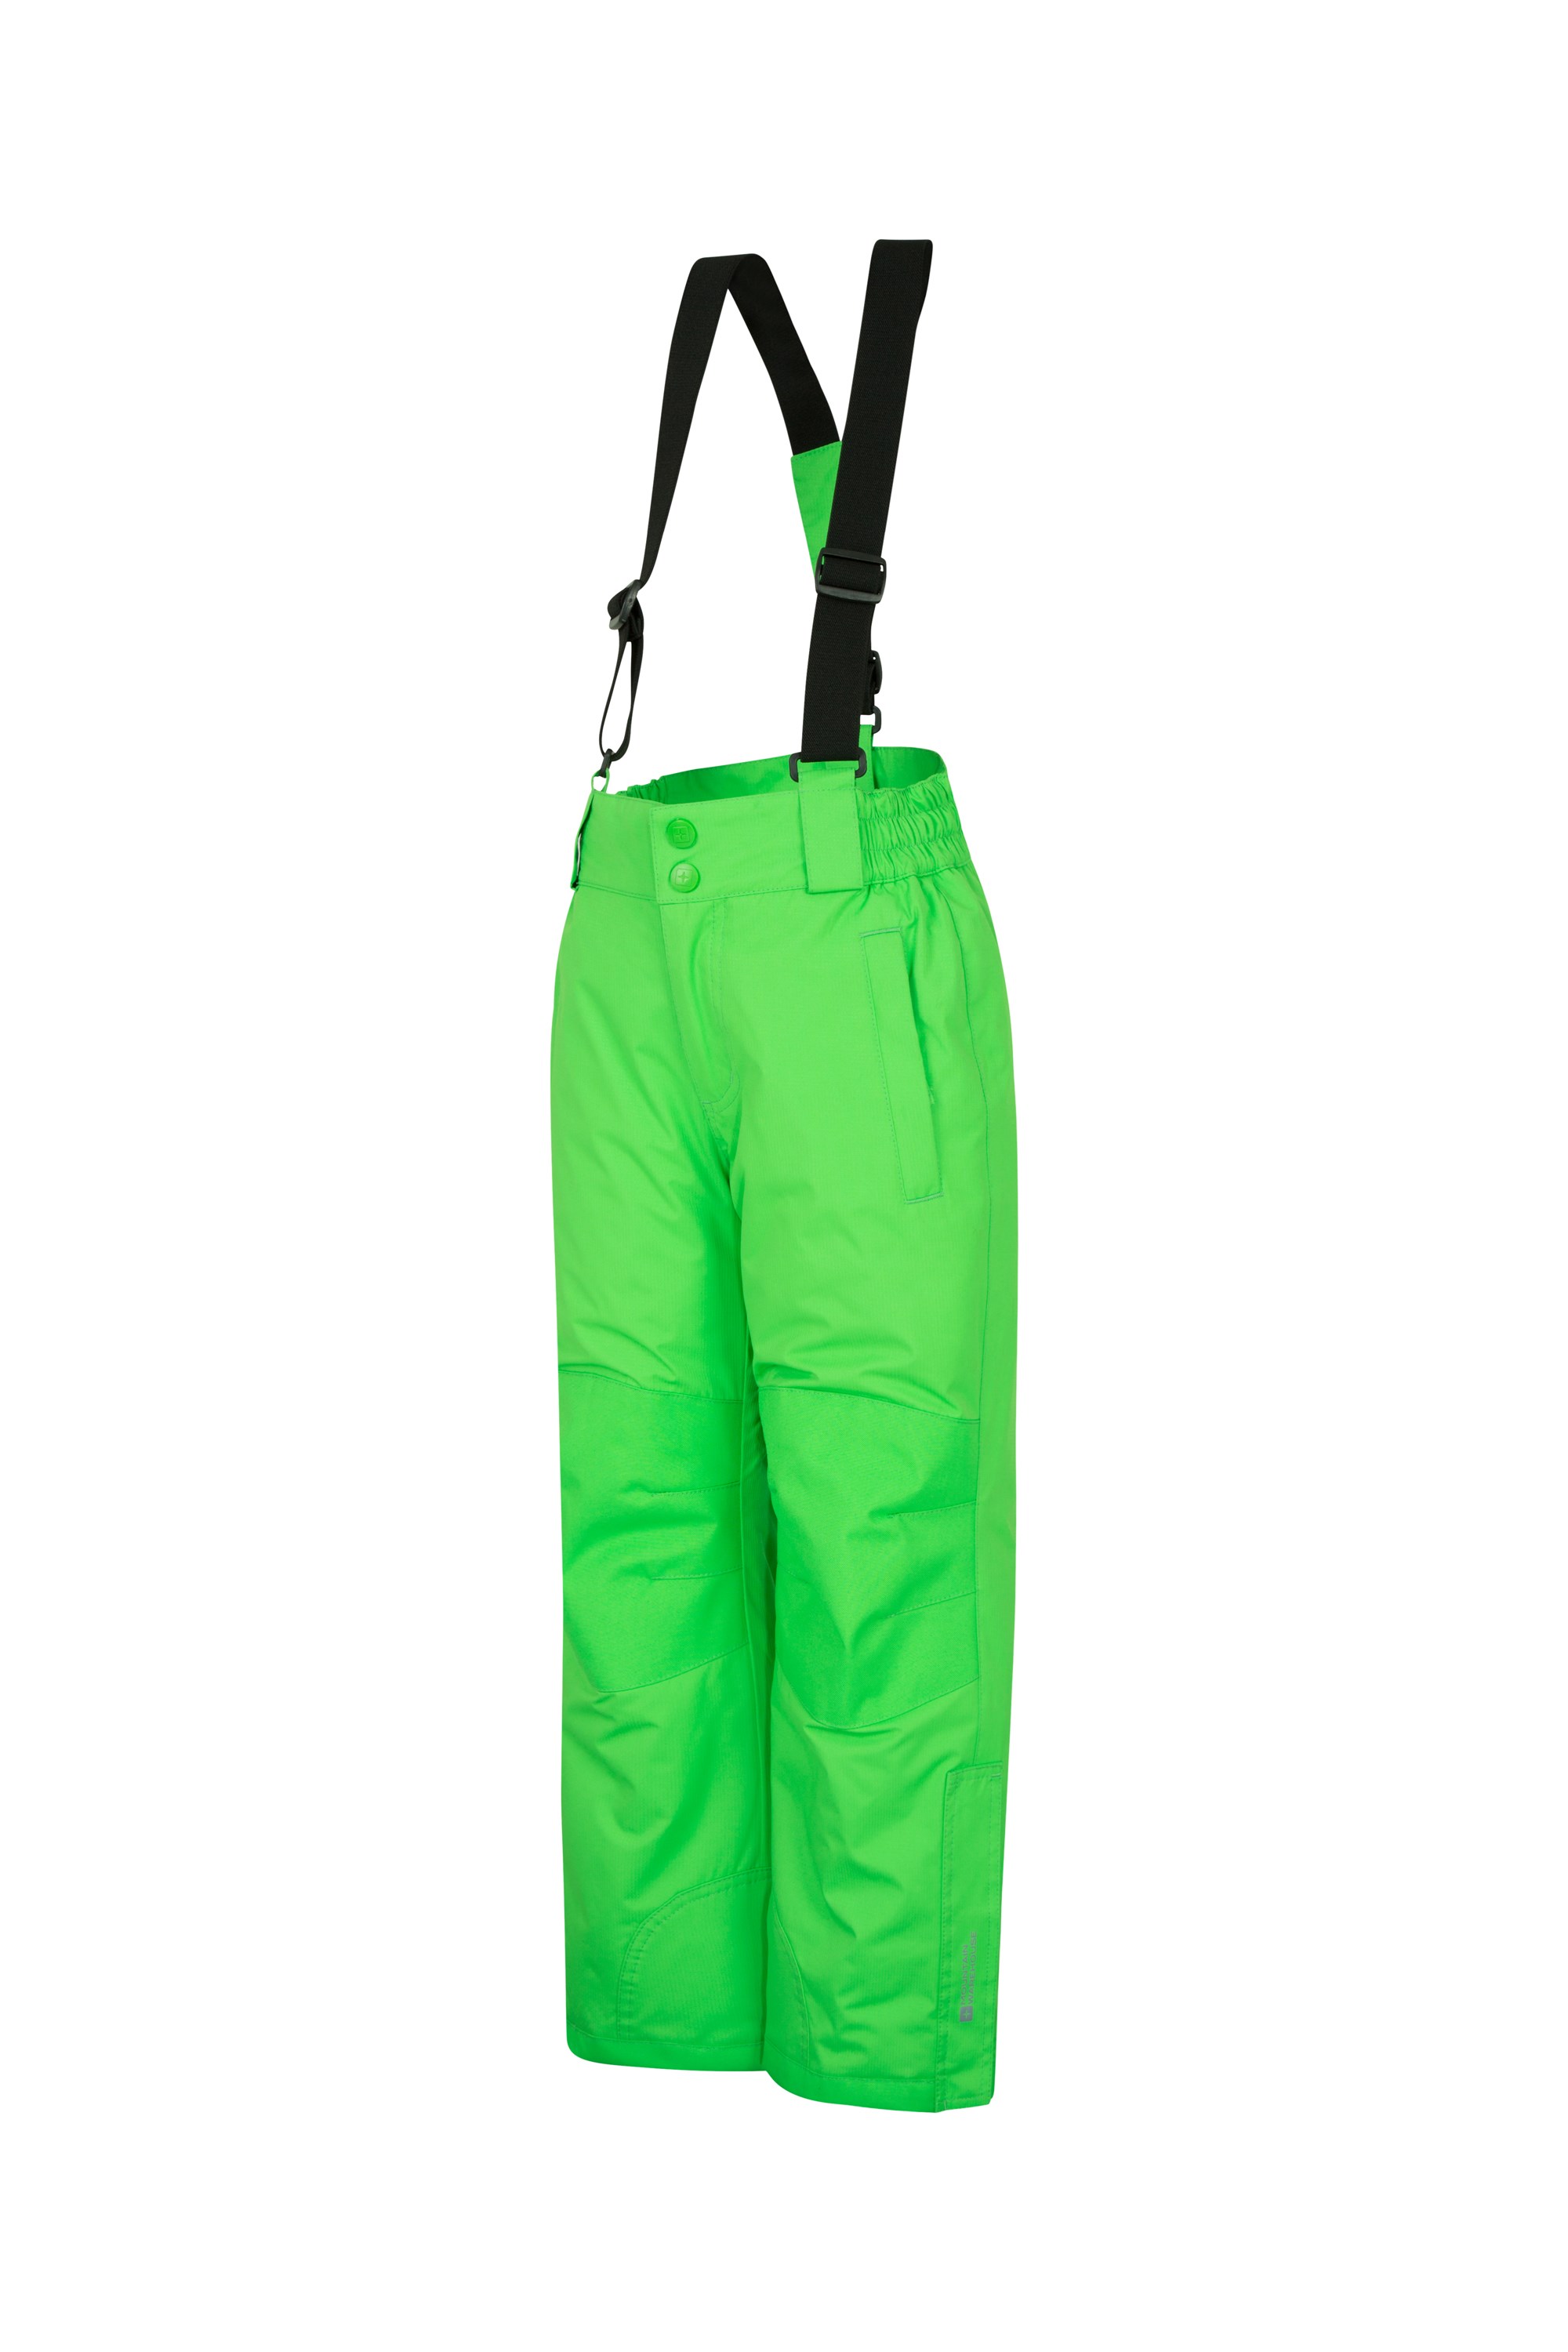 Mountain Warehouse Raptor Kids Snow Ski Pants Detachable Suspenders 